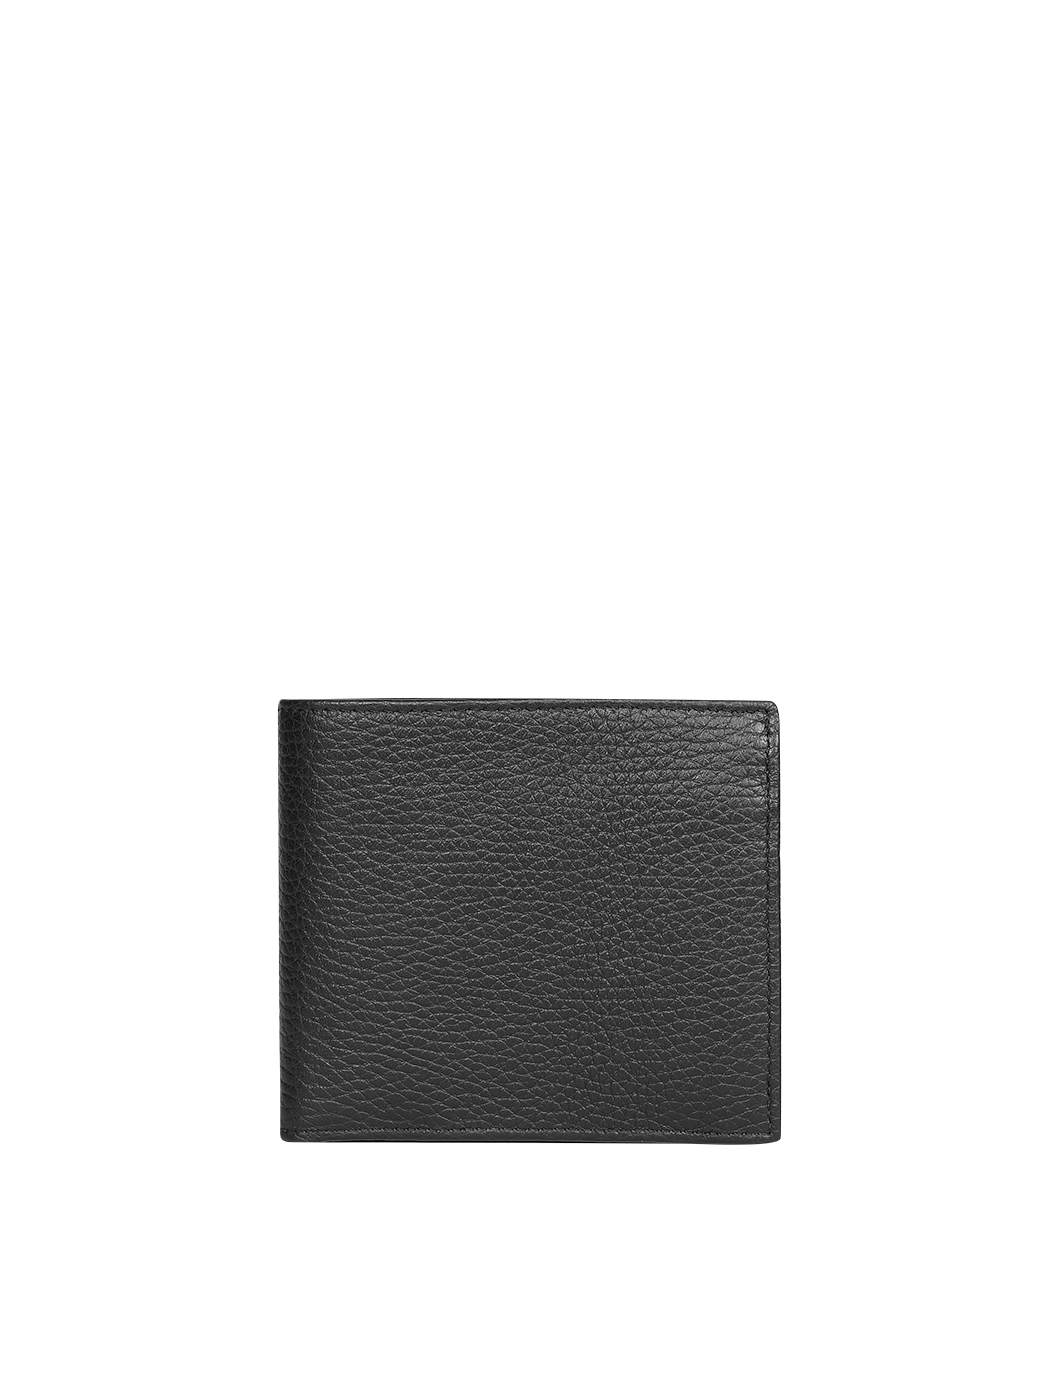 Pebble Leather Billfold Coin Pocket Wallet Black